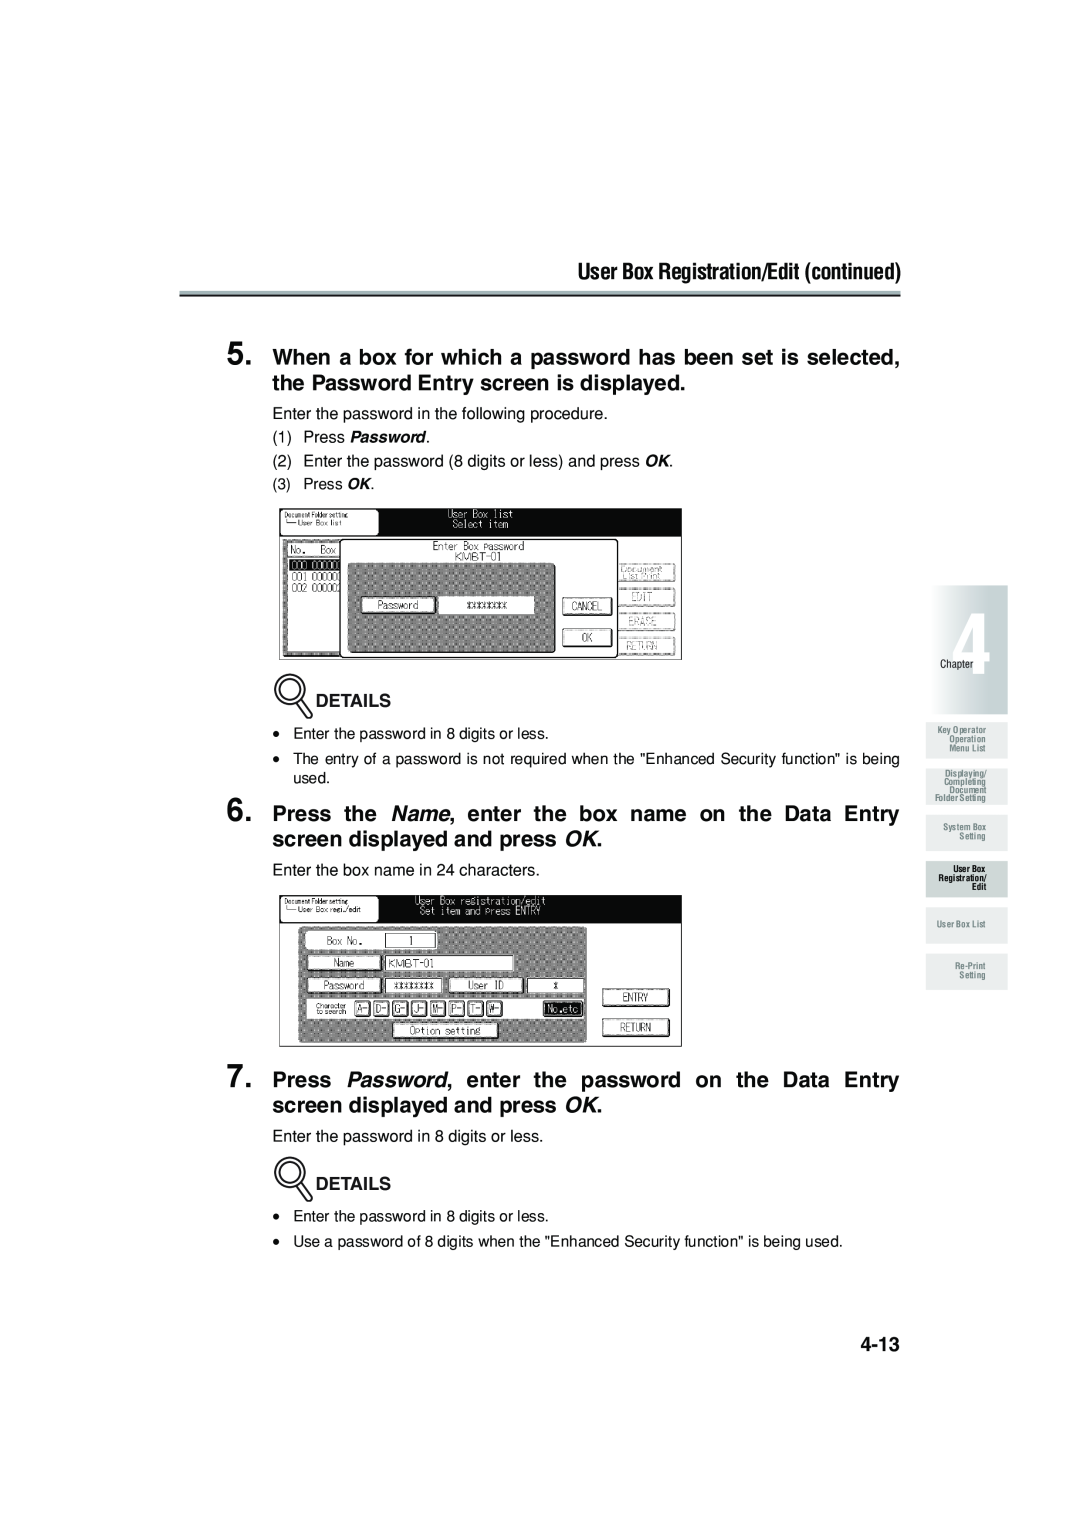 Konica Minolta 7222 manual User Box Registration/Edit continued 